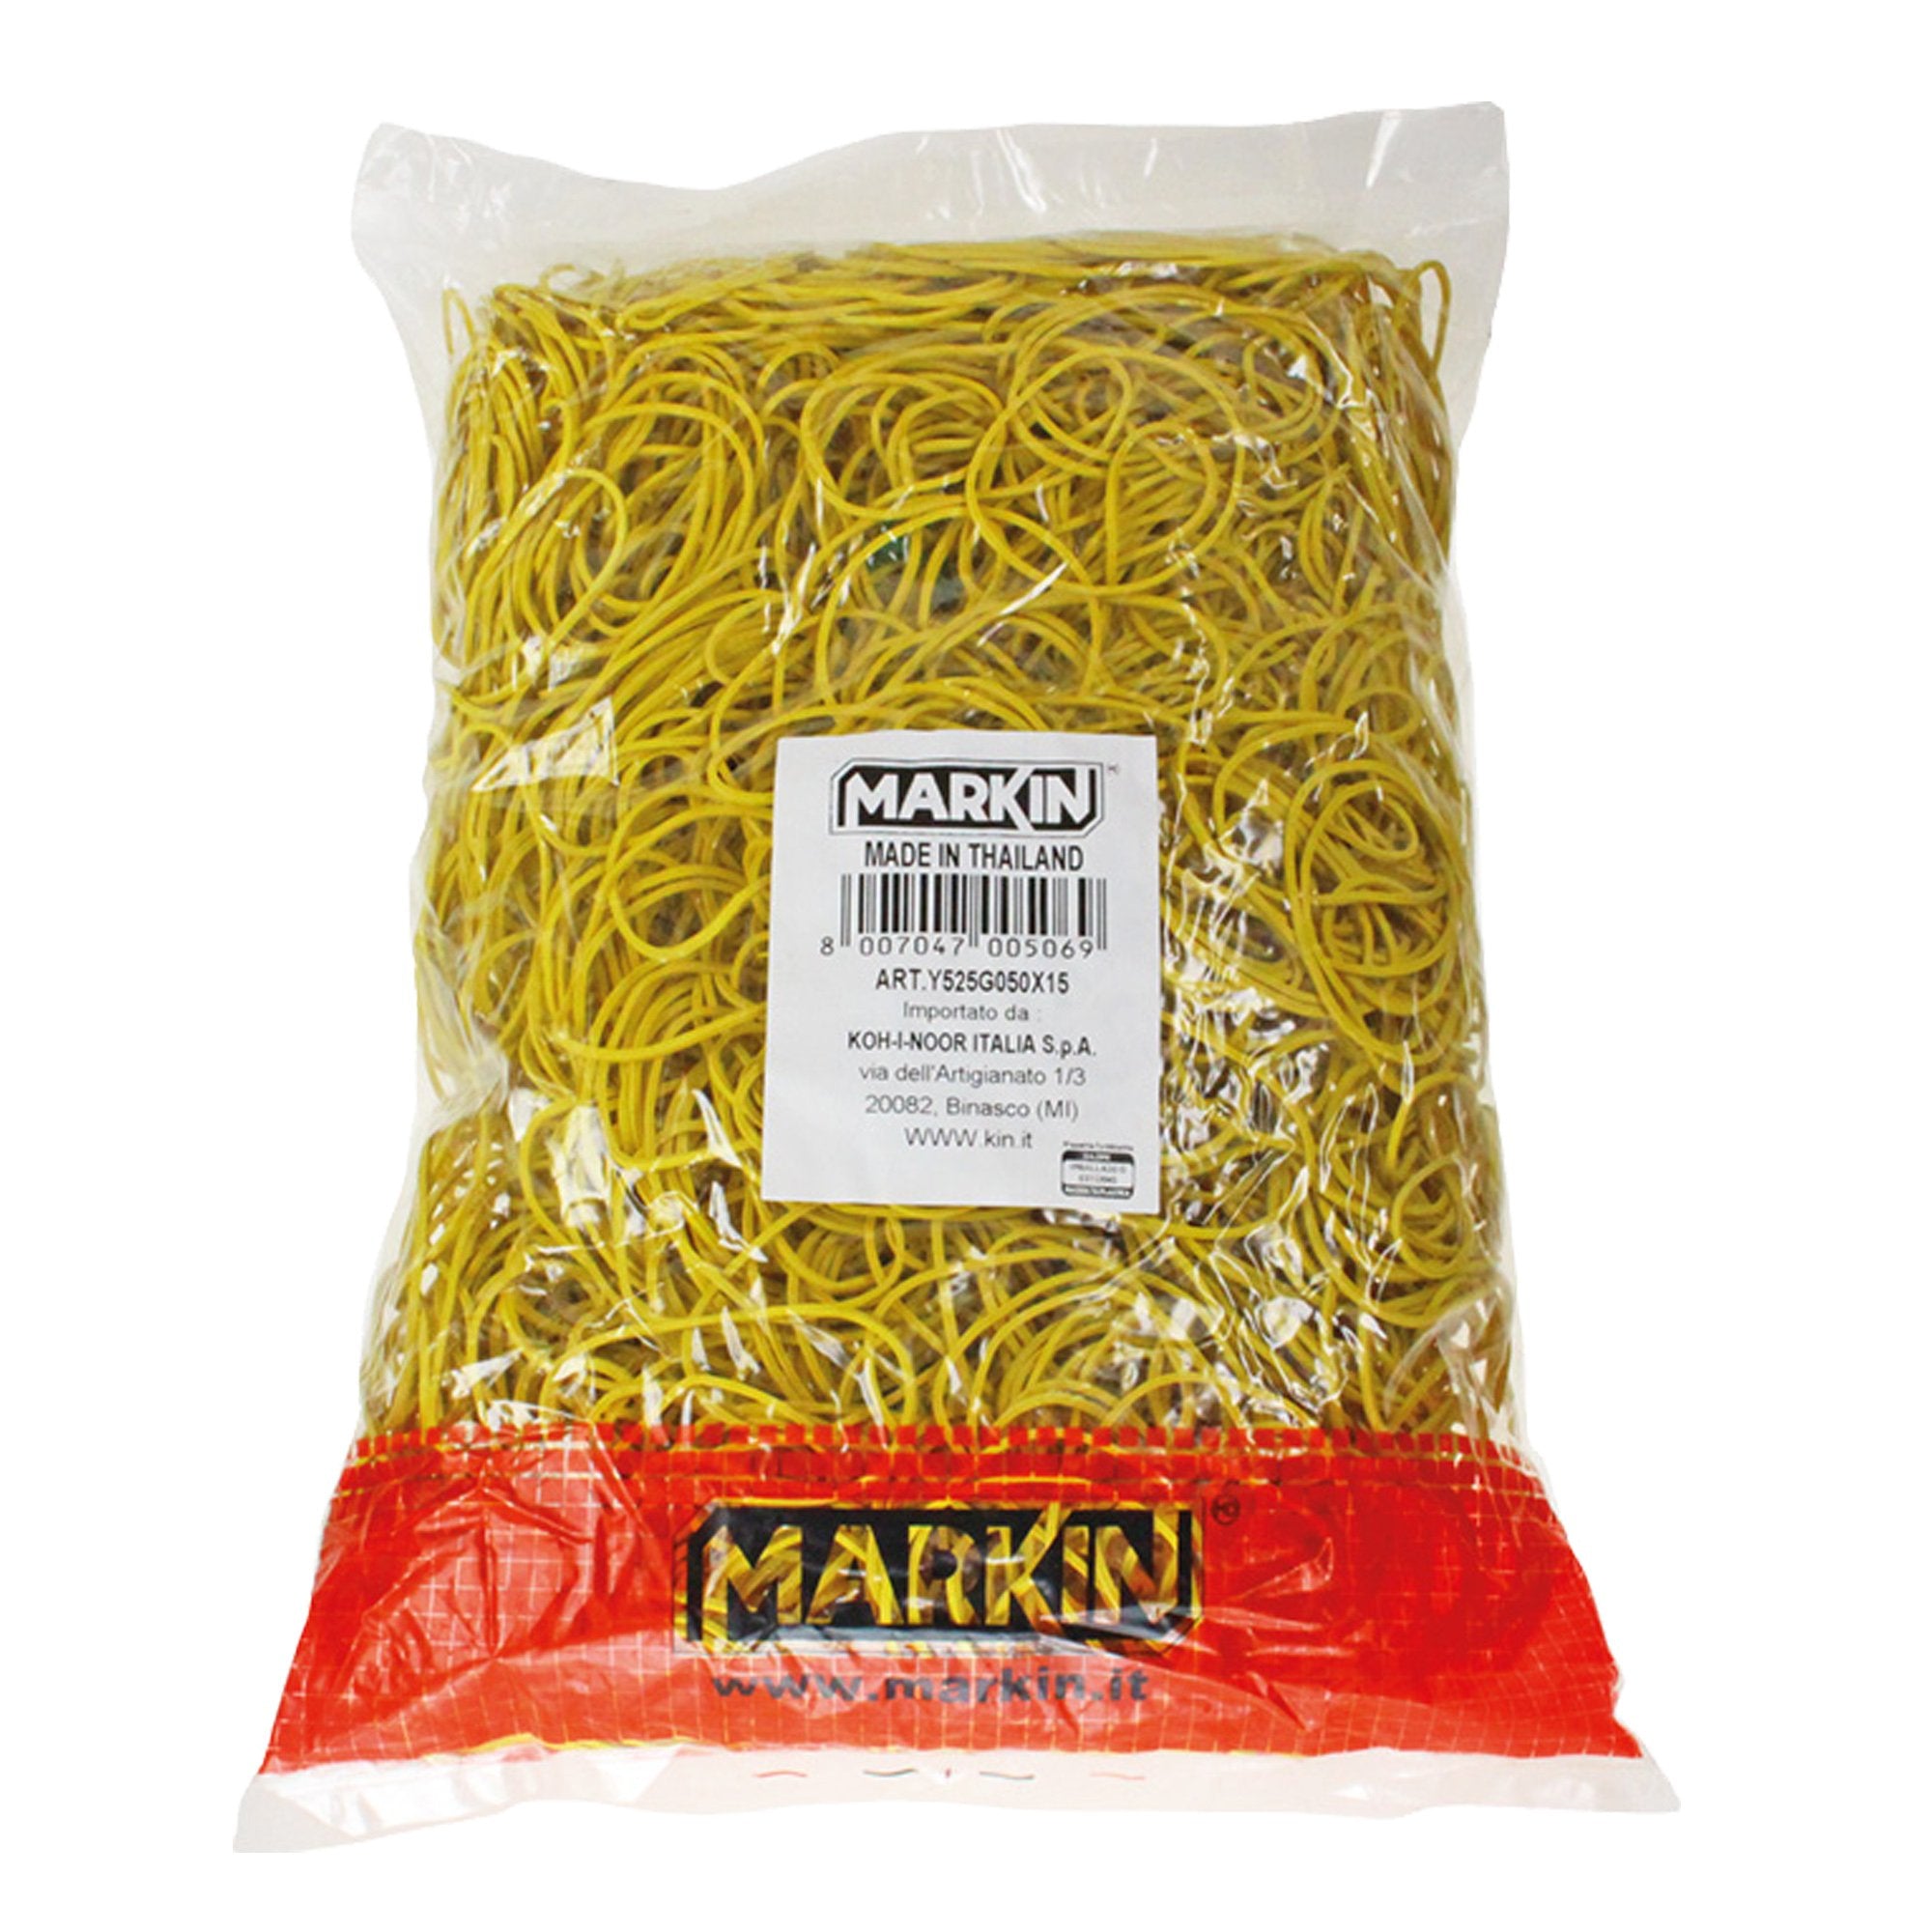 markin-elastico-gomma-giallo-d120-sacco-1kg